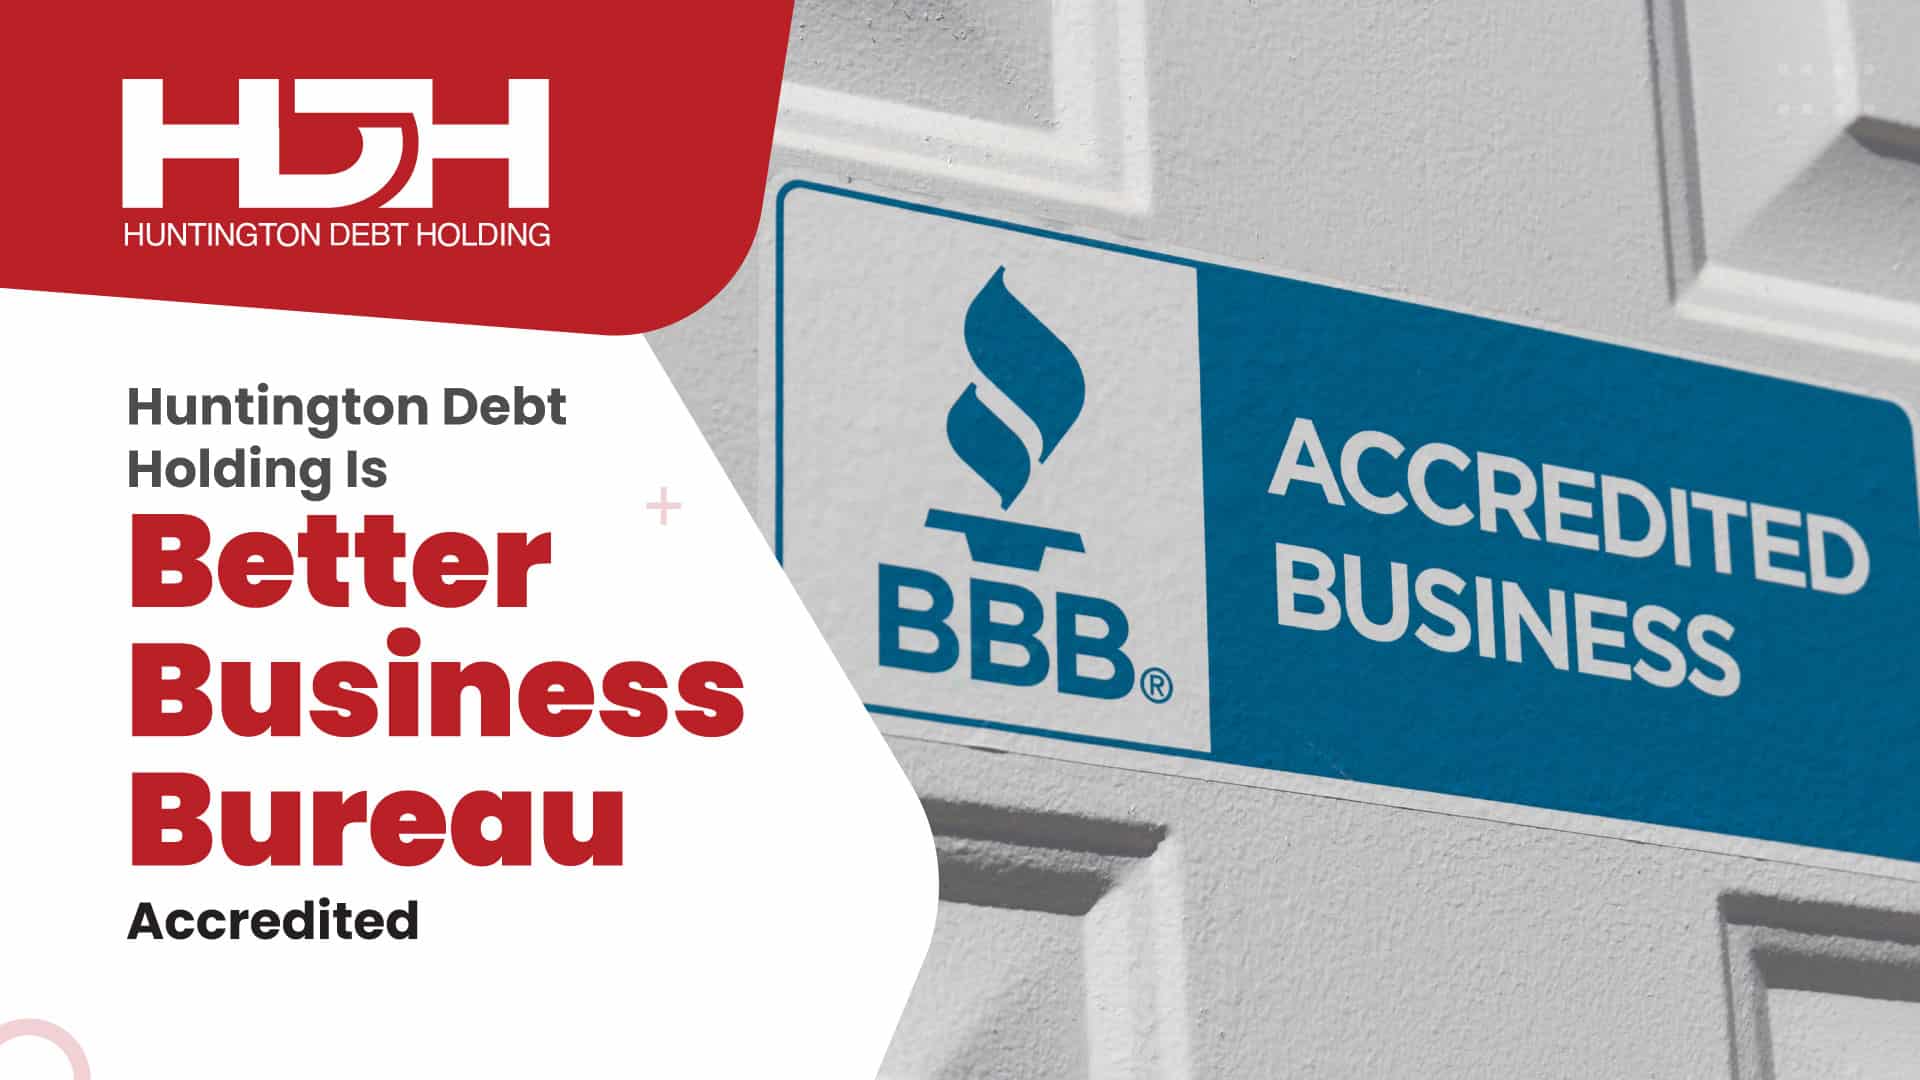 Better Business Bureau accredited business